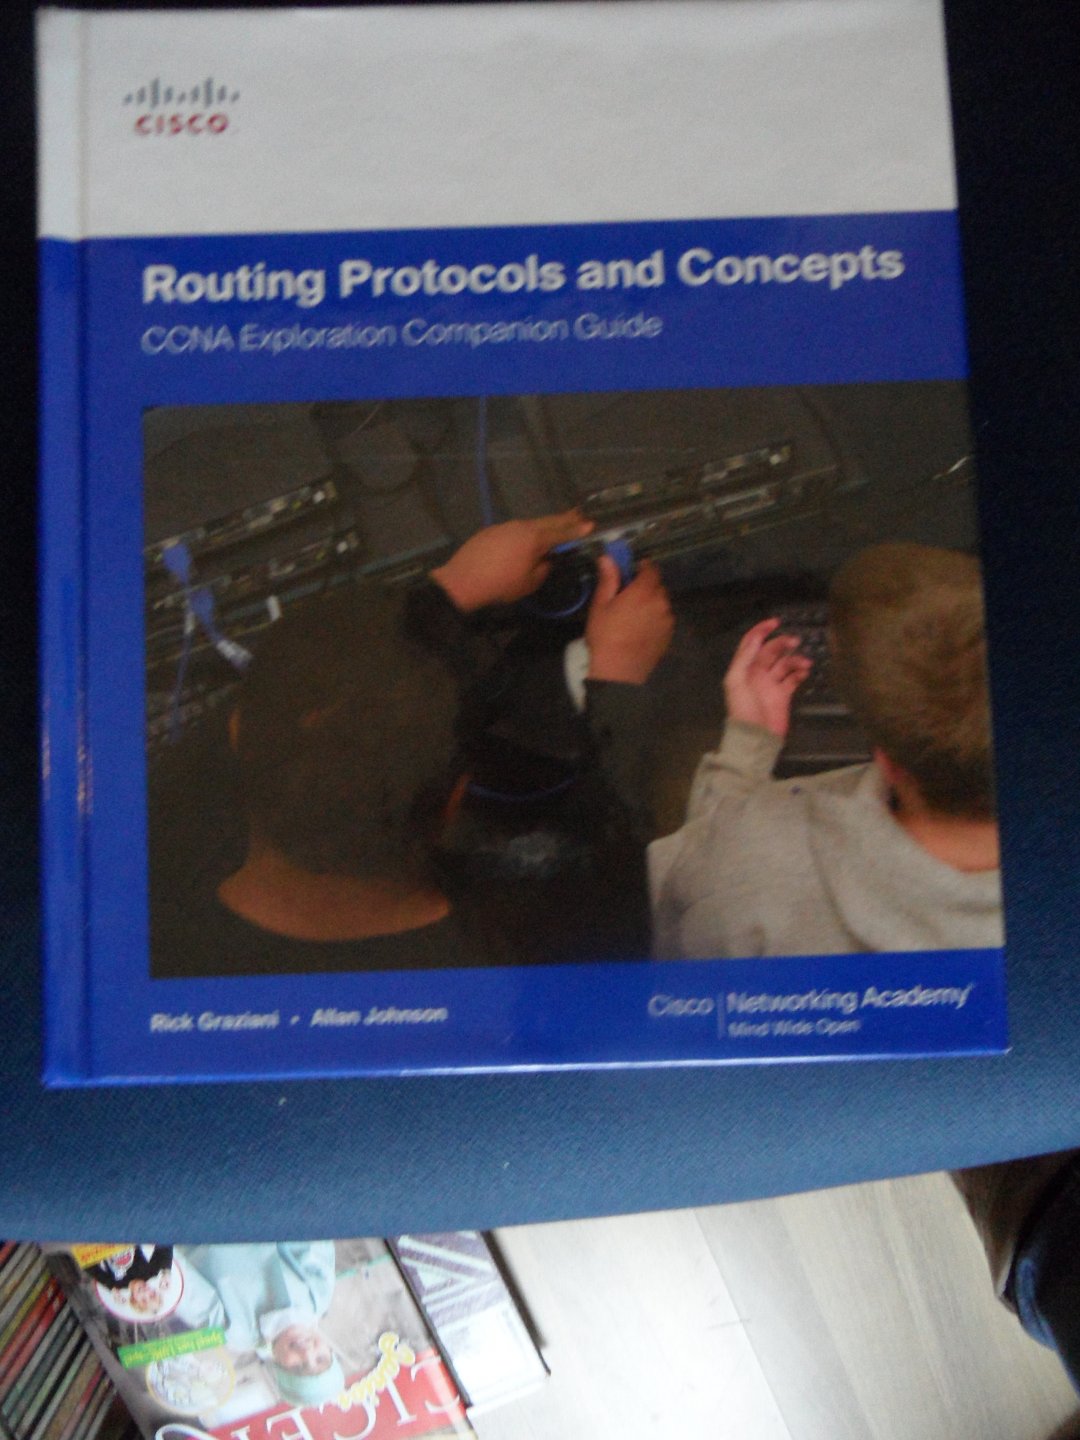 Johnson, Allan and Graziani, Rick - Routing Protocols and Concepts - CCNA Exploration Companion Guide. Met CD-rom